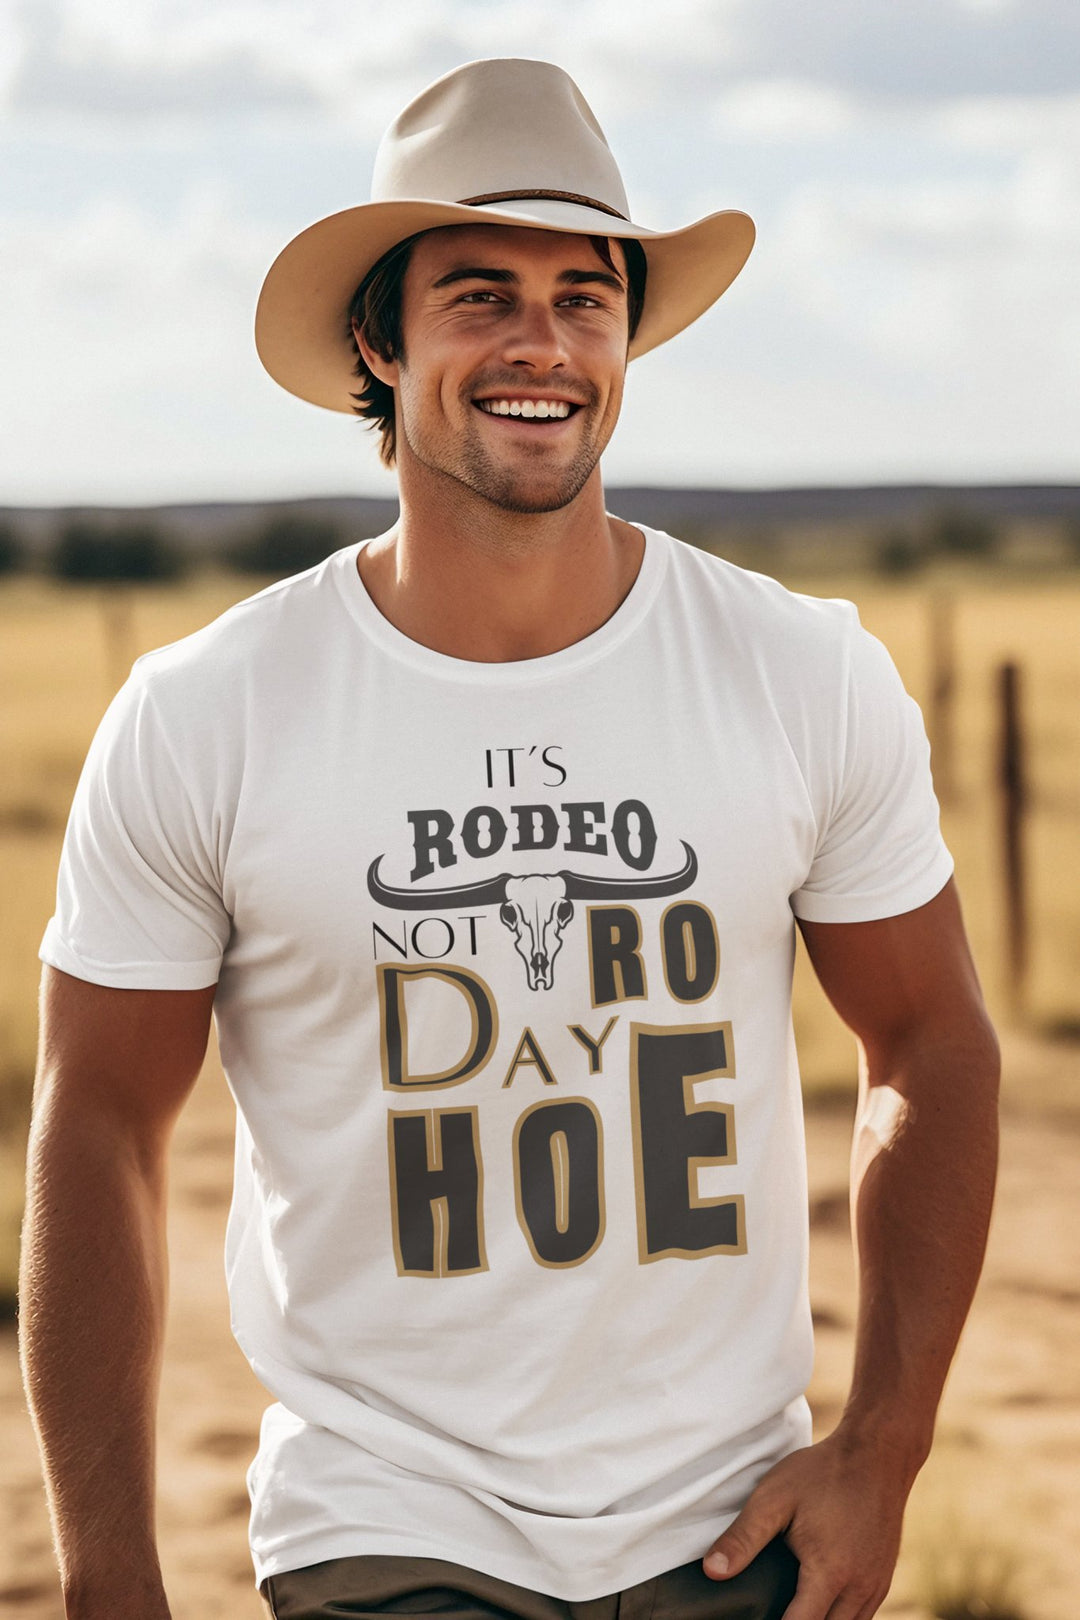 It's Rodeo Mens Short-Sleeve T-Shirt